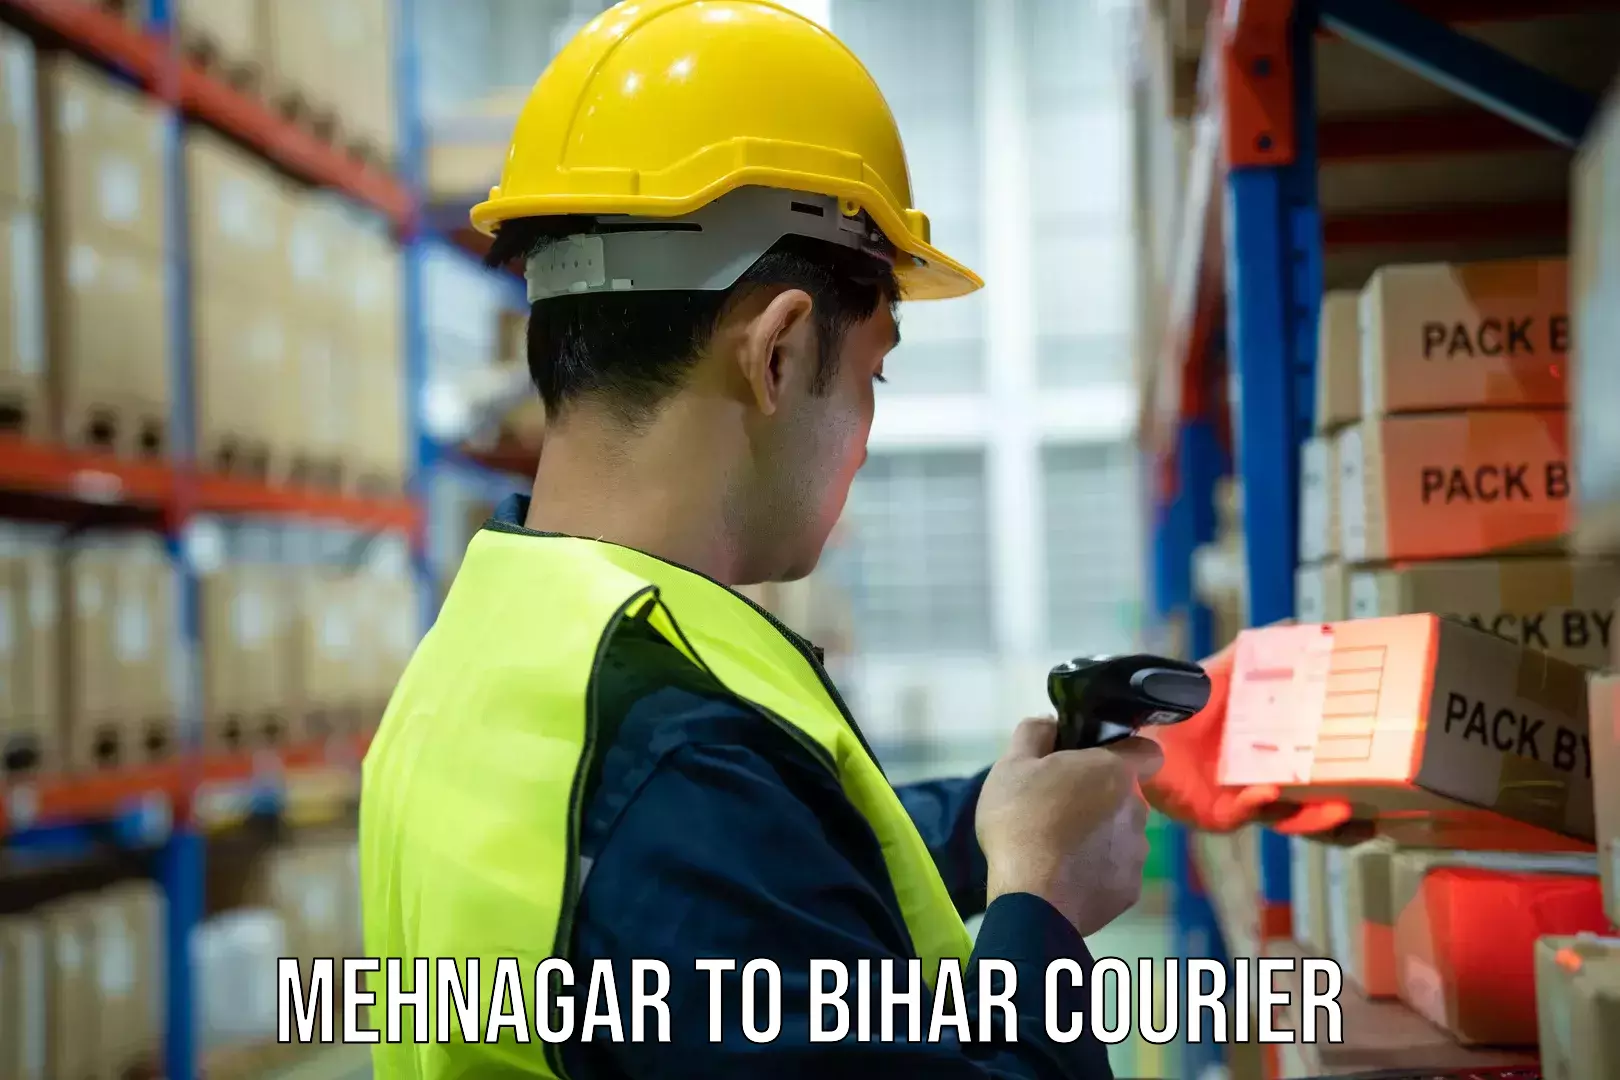 User-friendly delivery service Mehnagar to Bihar